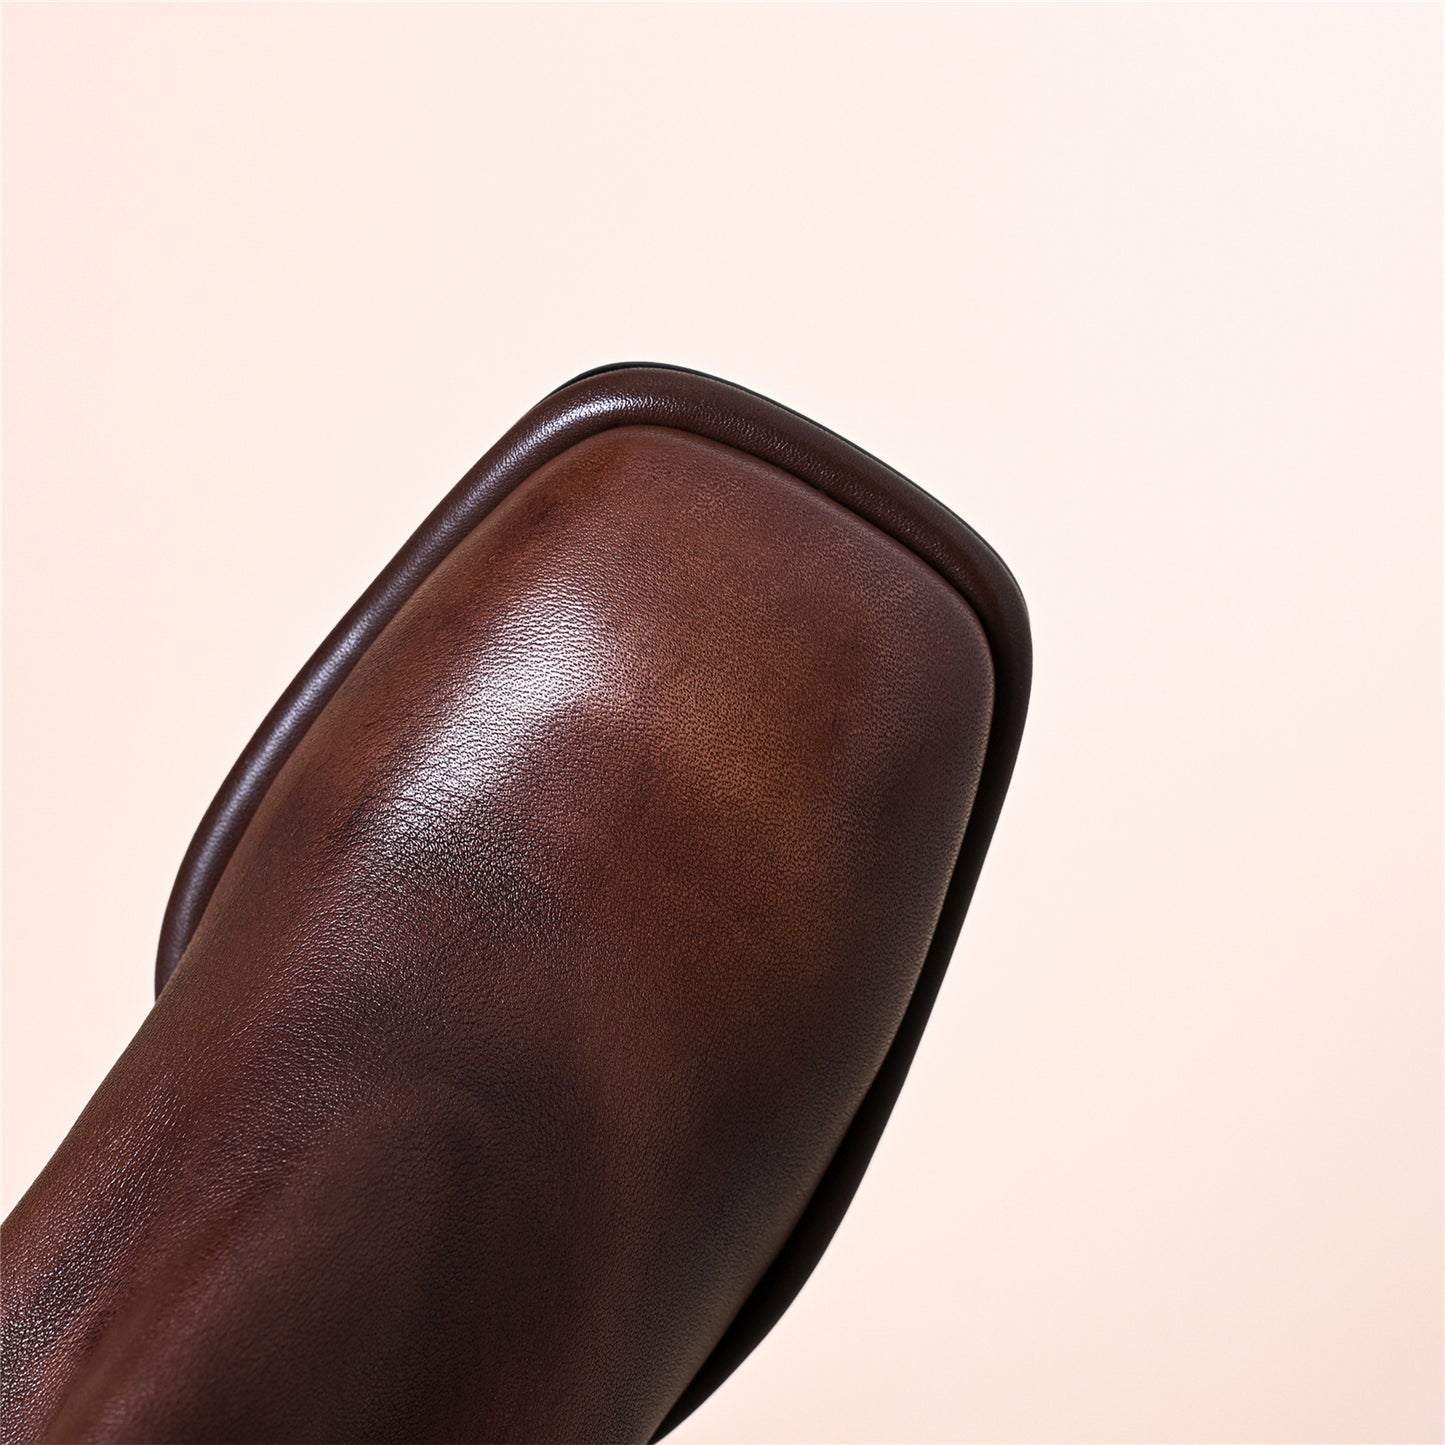 TinaCus Women's Genuine Leather Handmade Block Heel Back Zipper Ankle Boots